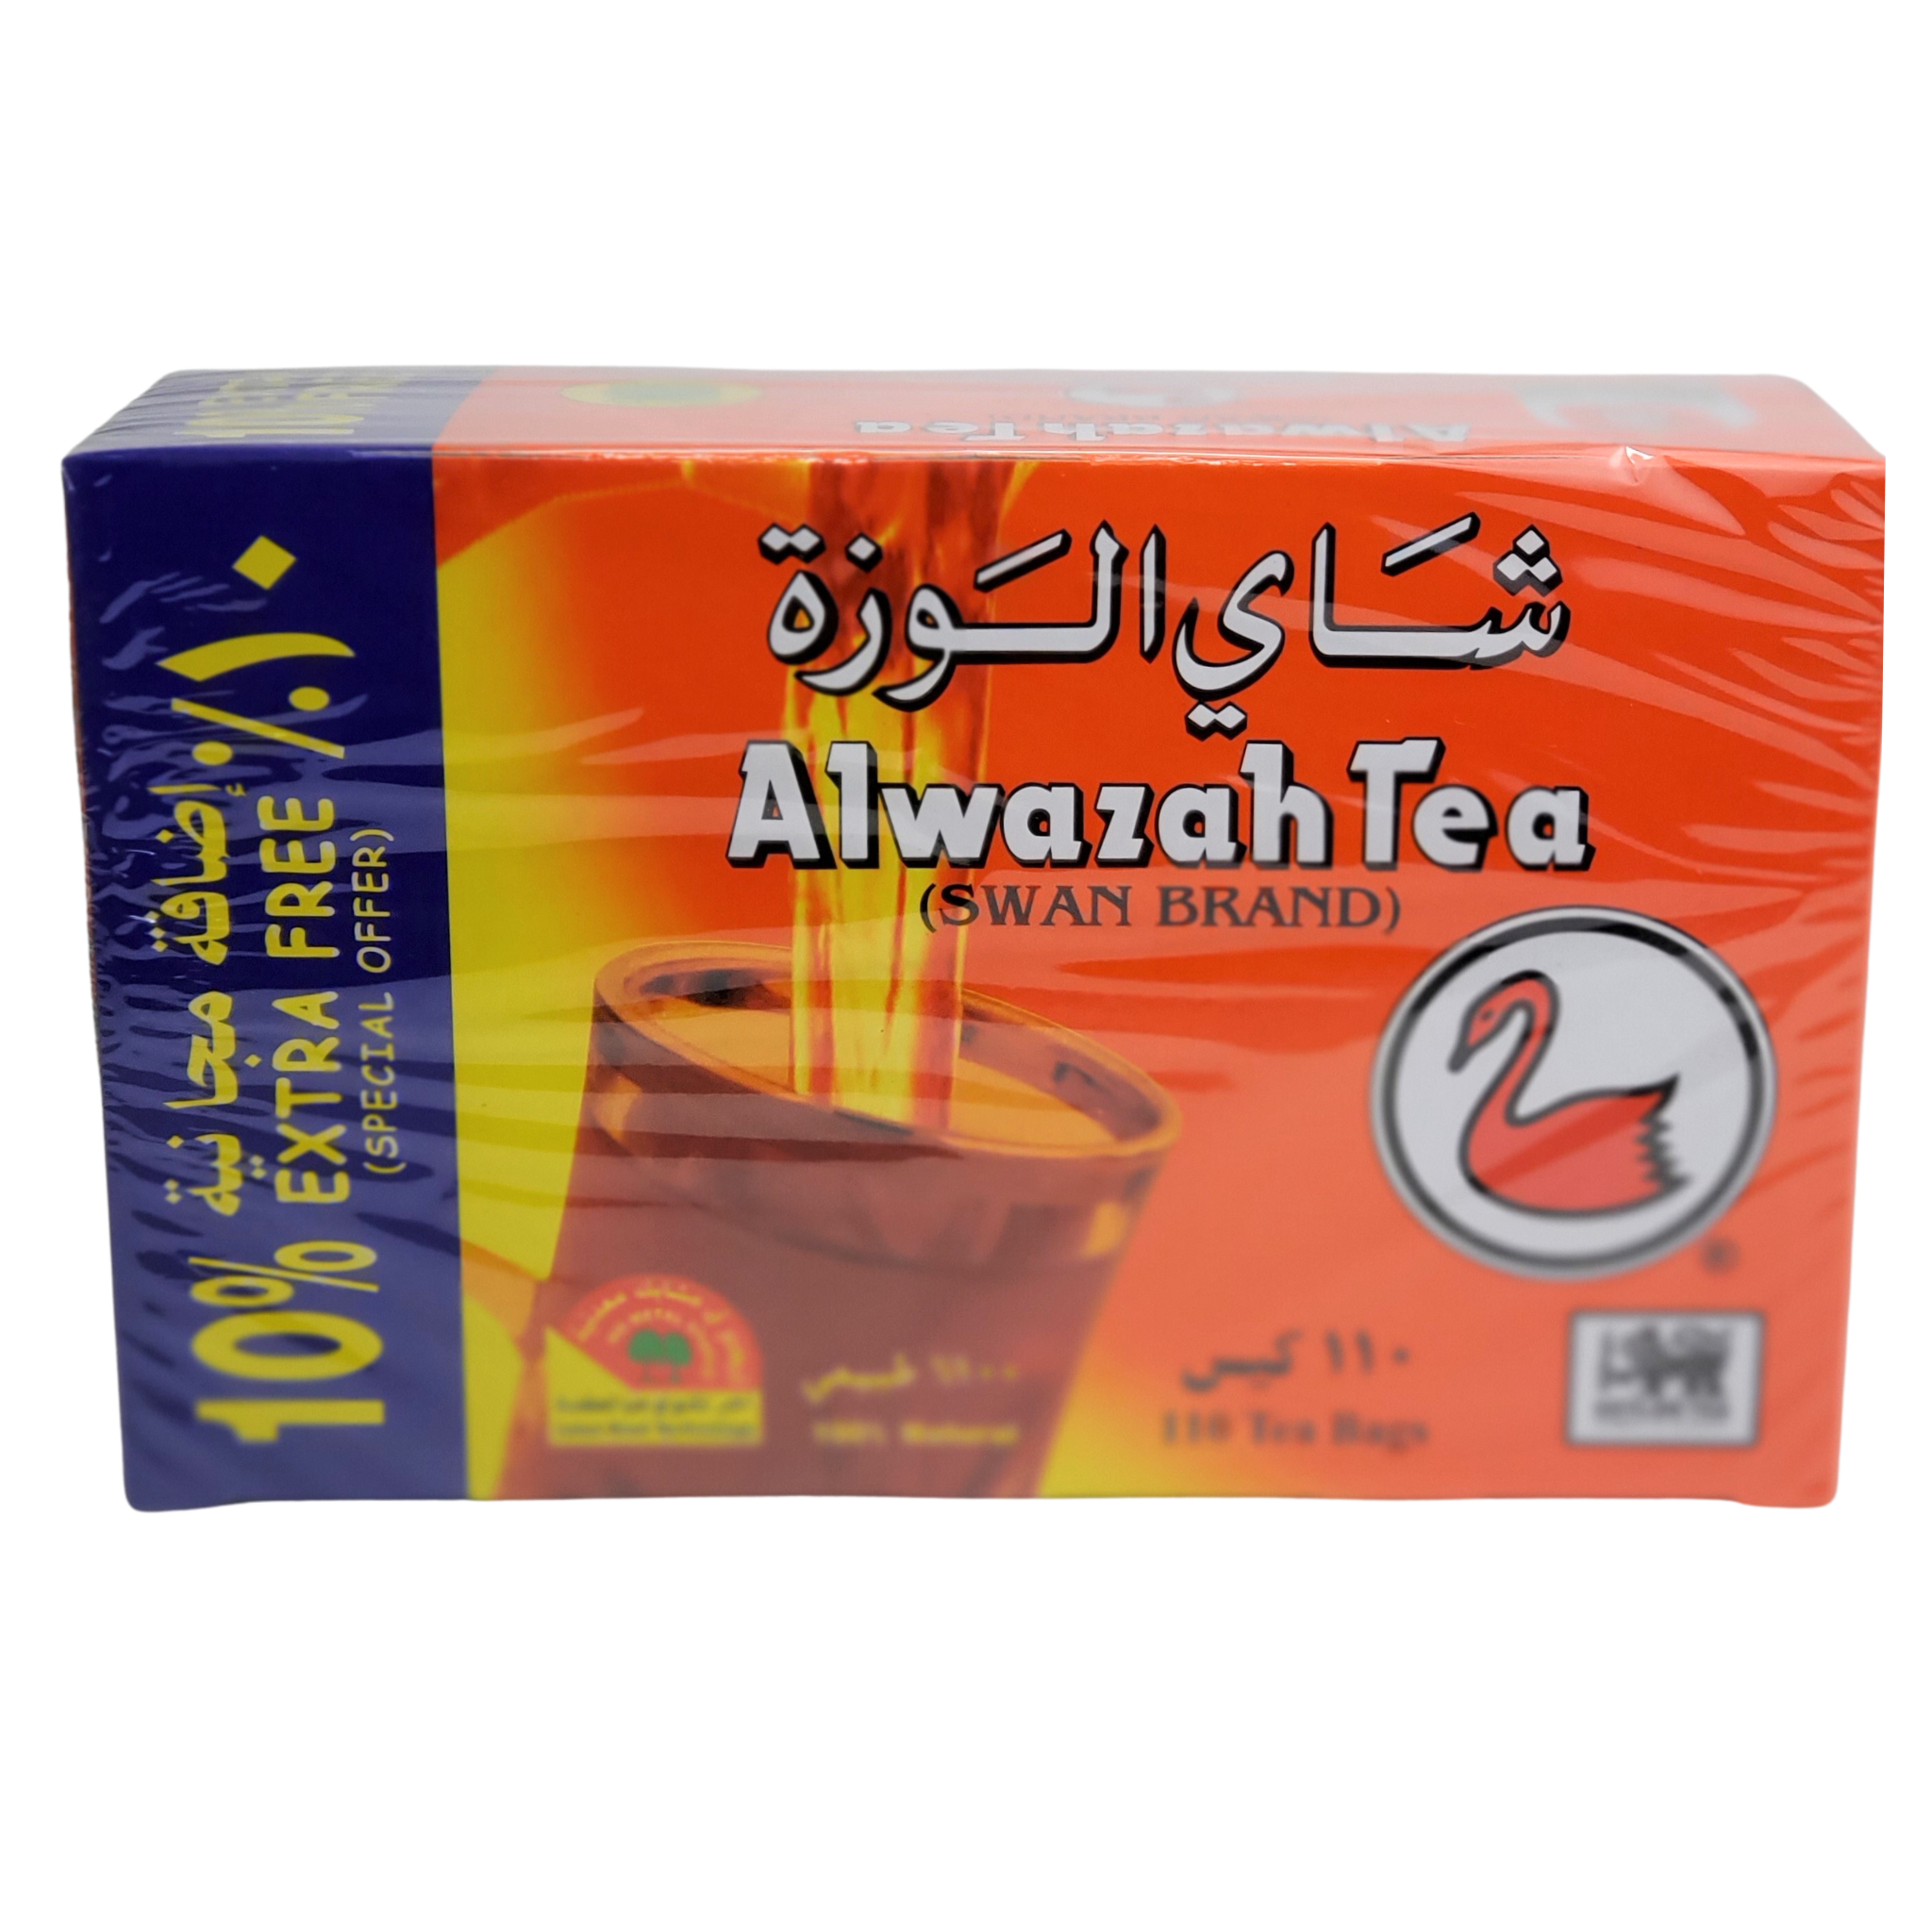 Alwazah Tea (Swan Brand) with Extra tea bags 110 bags